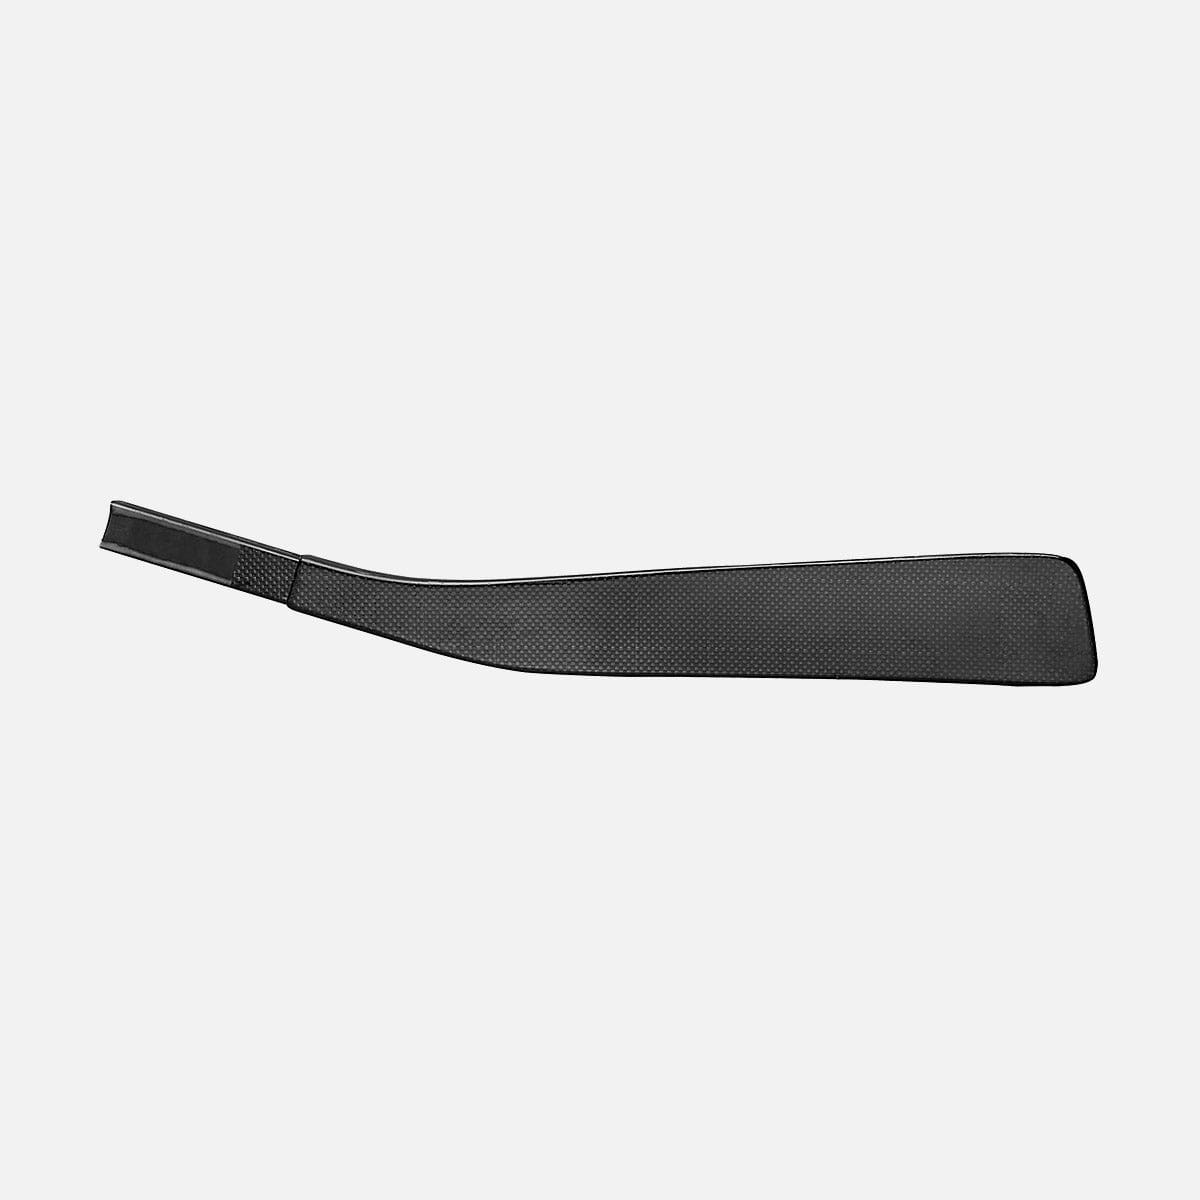 Warrior Sledge Hockey Composite Blade